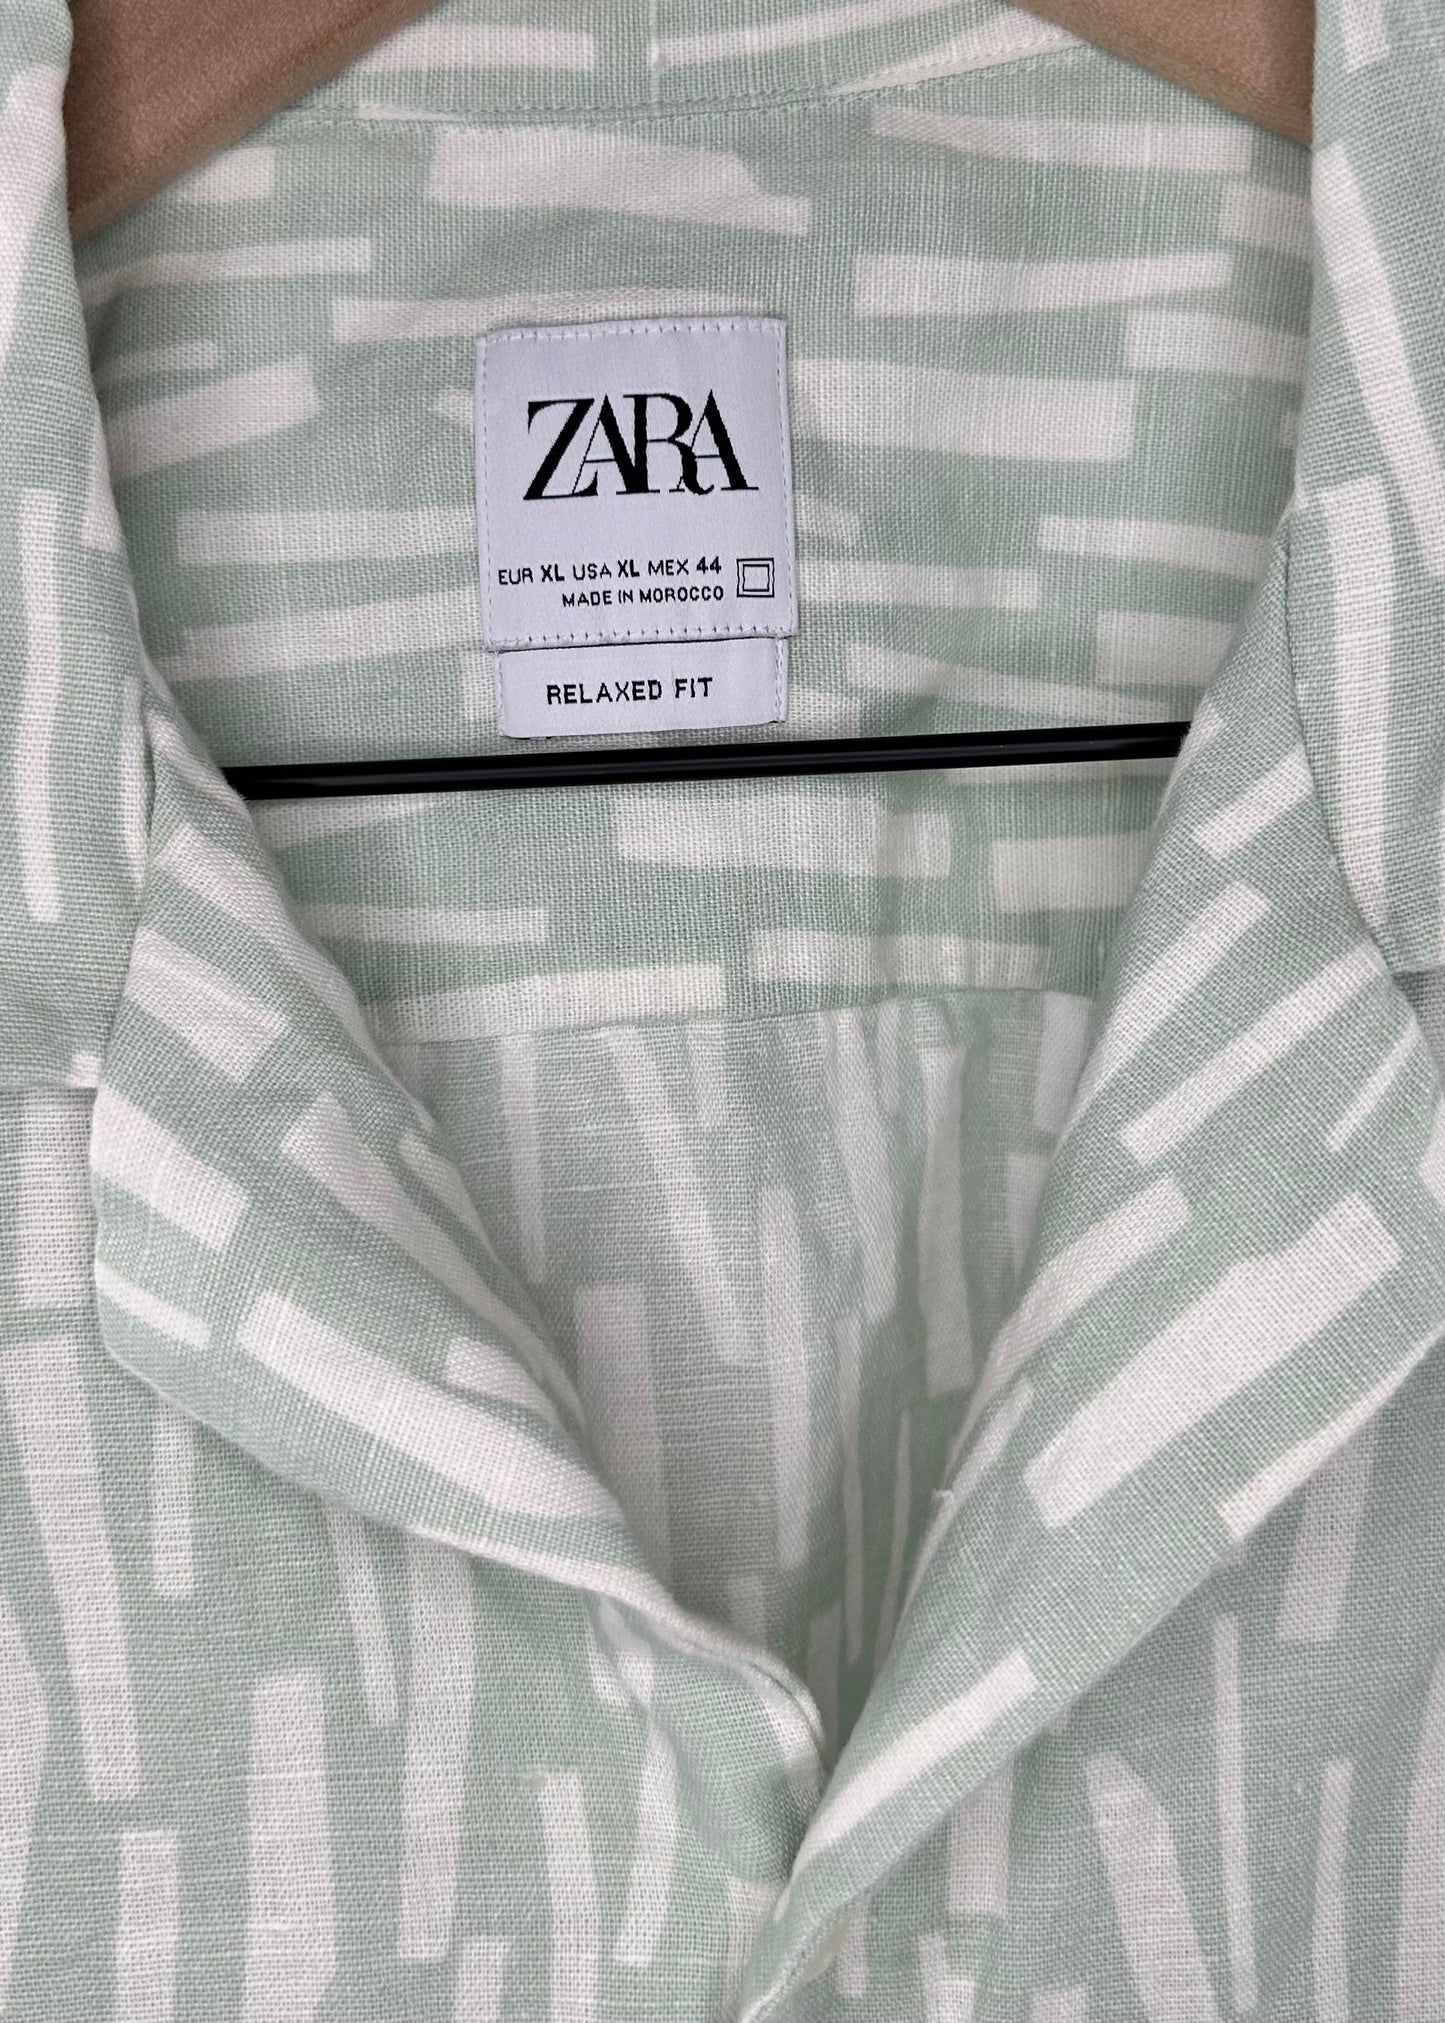 Green Button Up by Zara